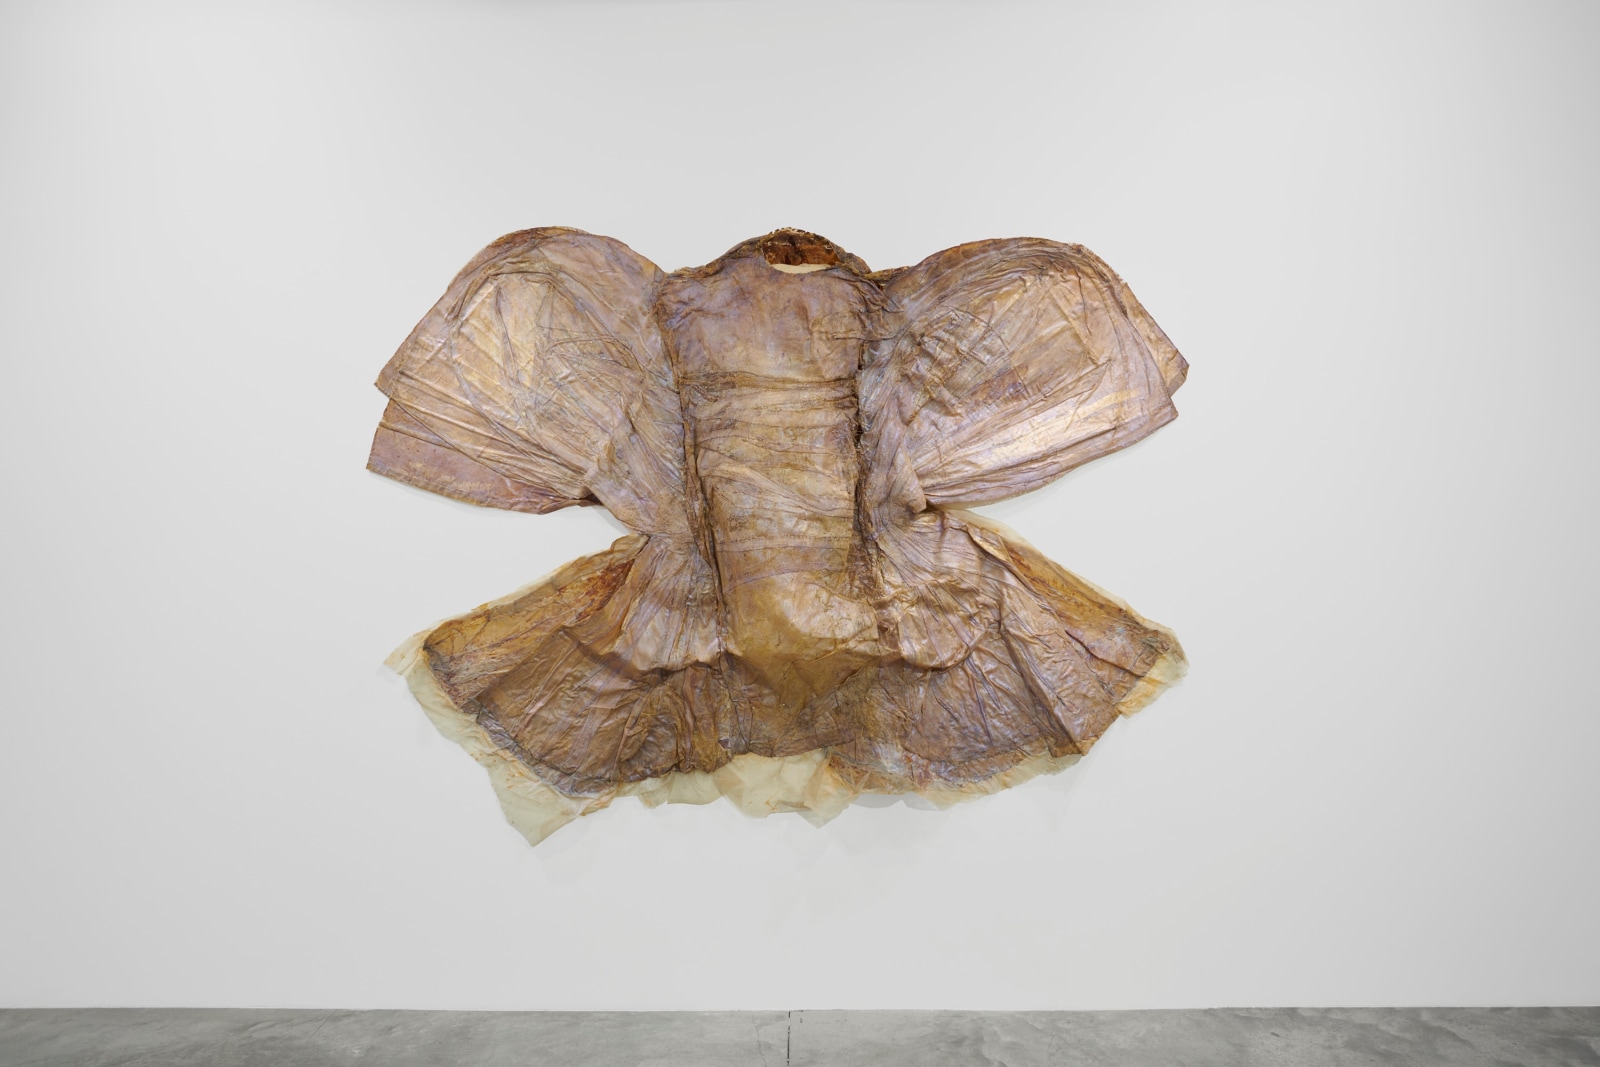 Heidi Bucher Installation view,&nbsp;Parasol unit&nbsp;foundation for contemporary art, London, UK